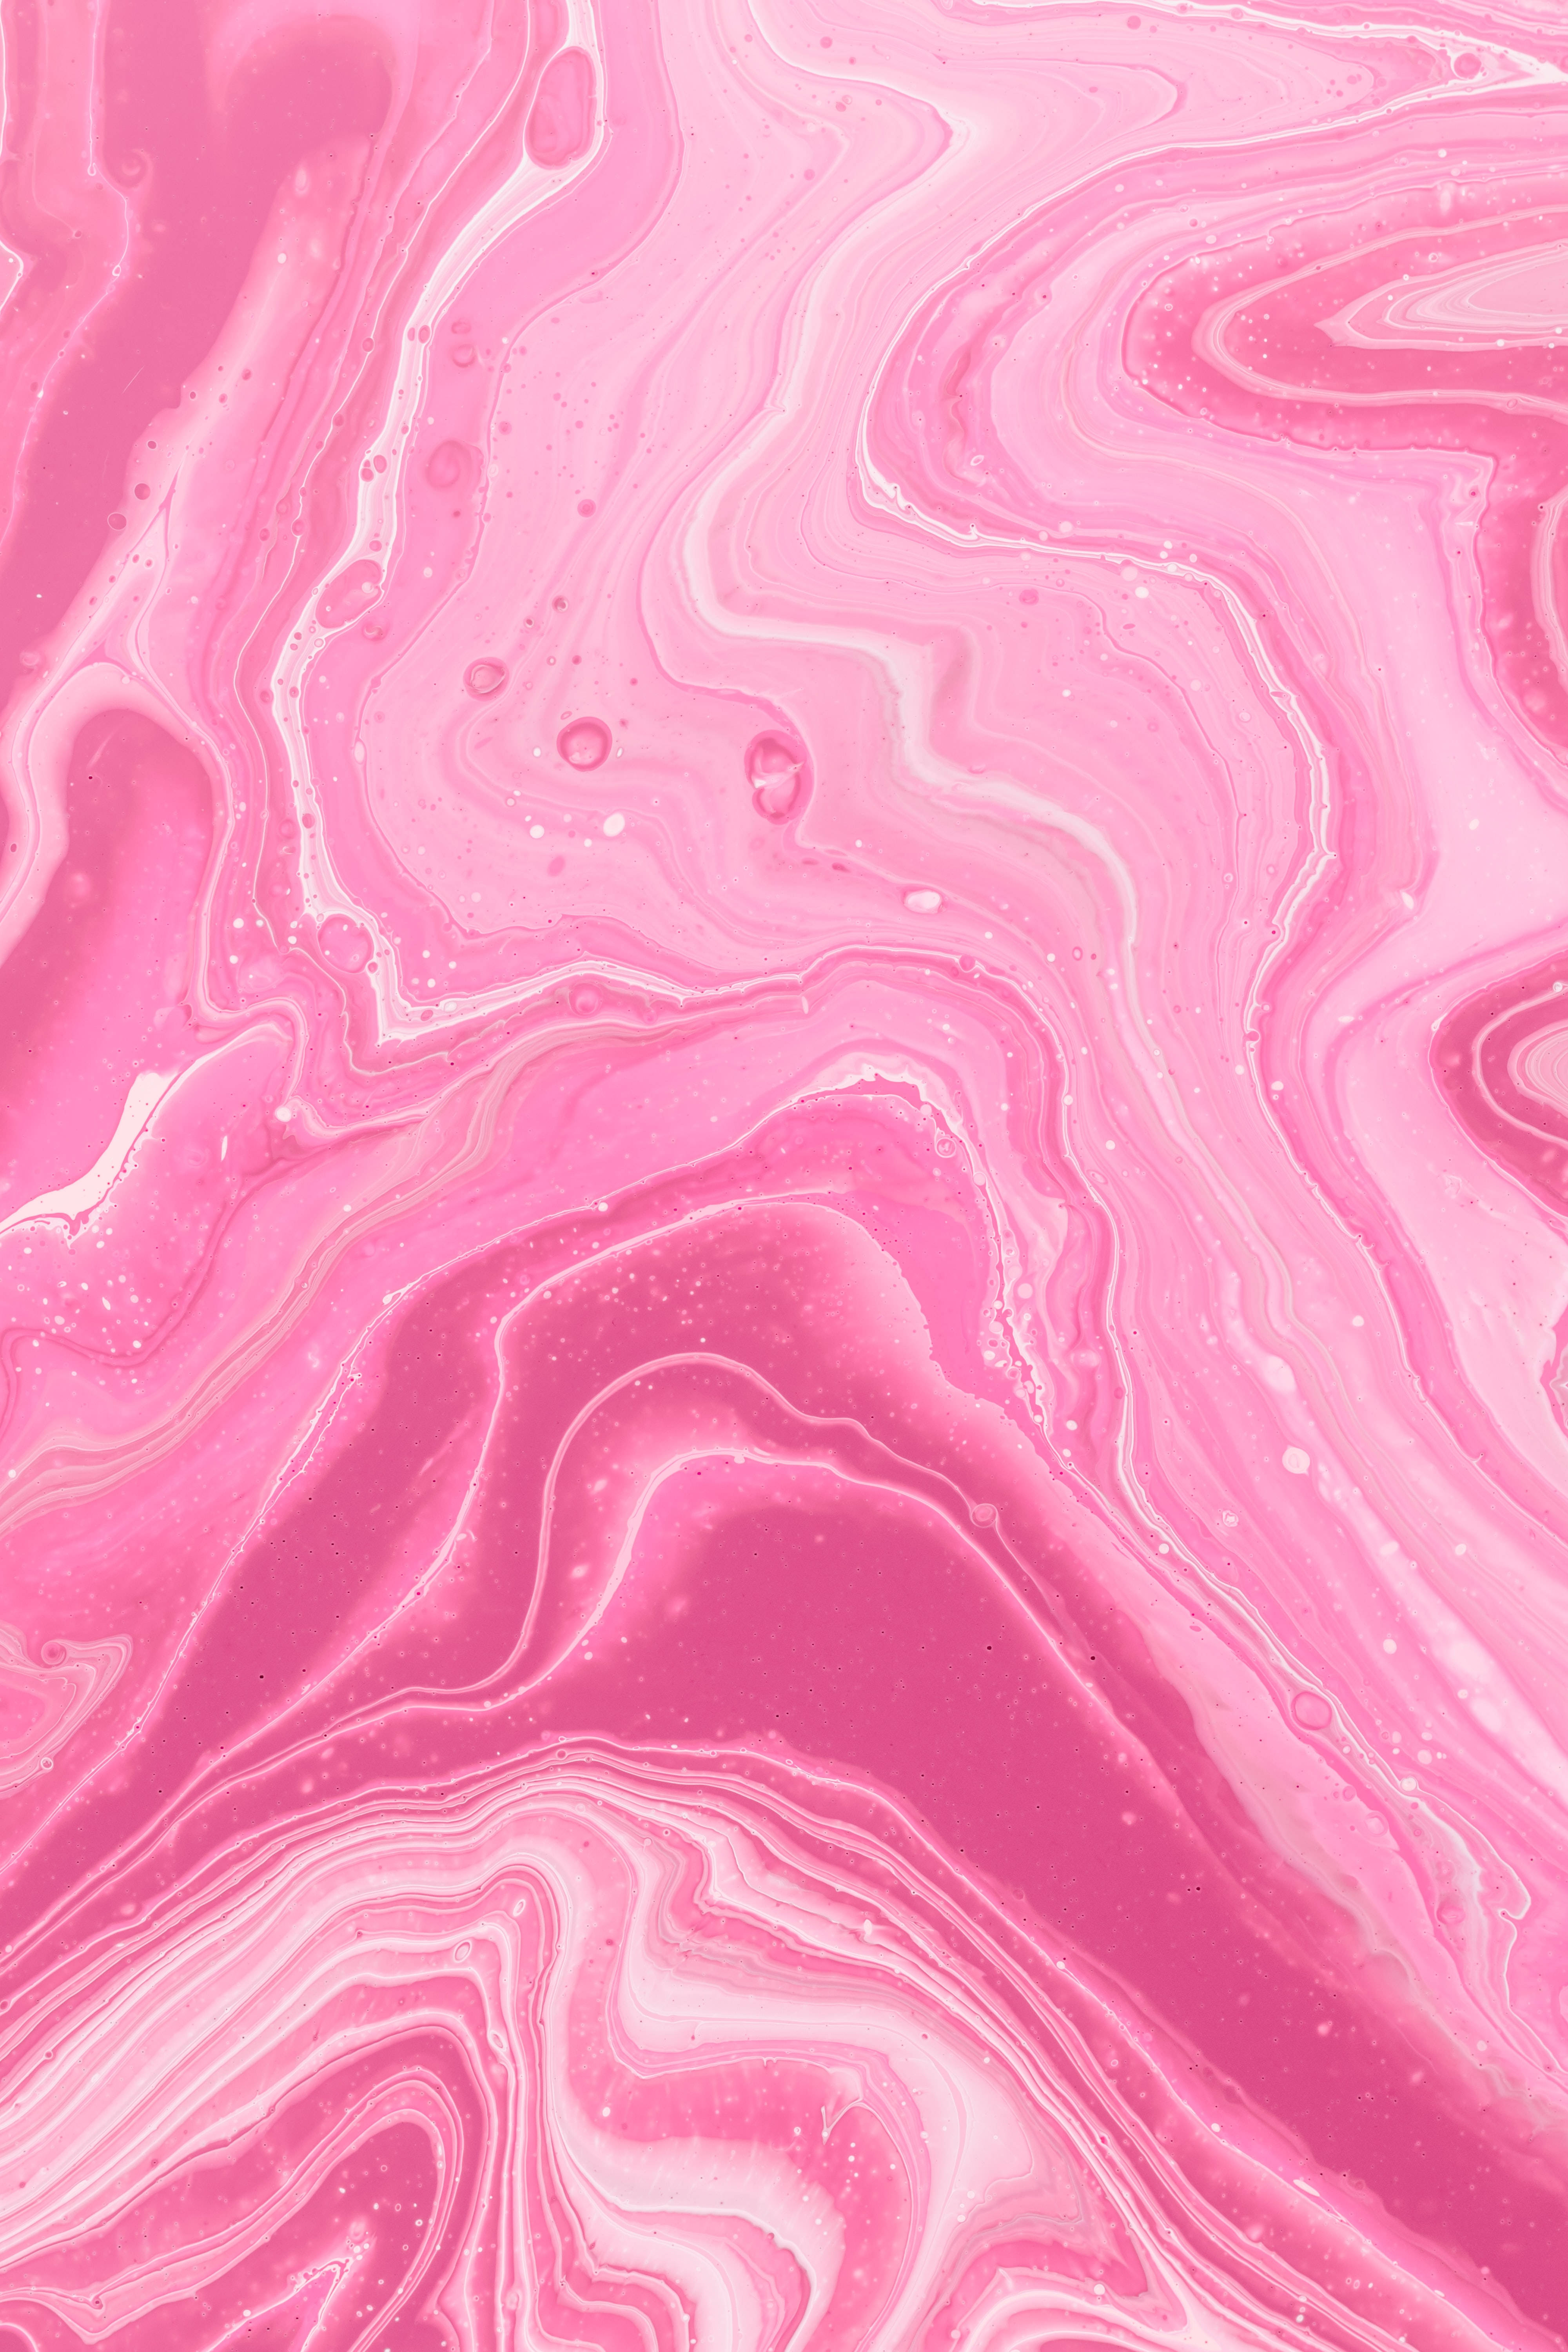 Pinkästhetik Wirbelndes Marmor 4k Wallpaper